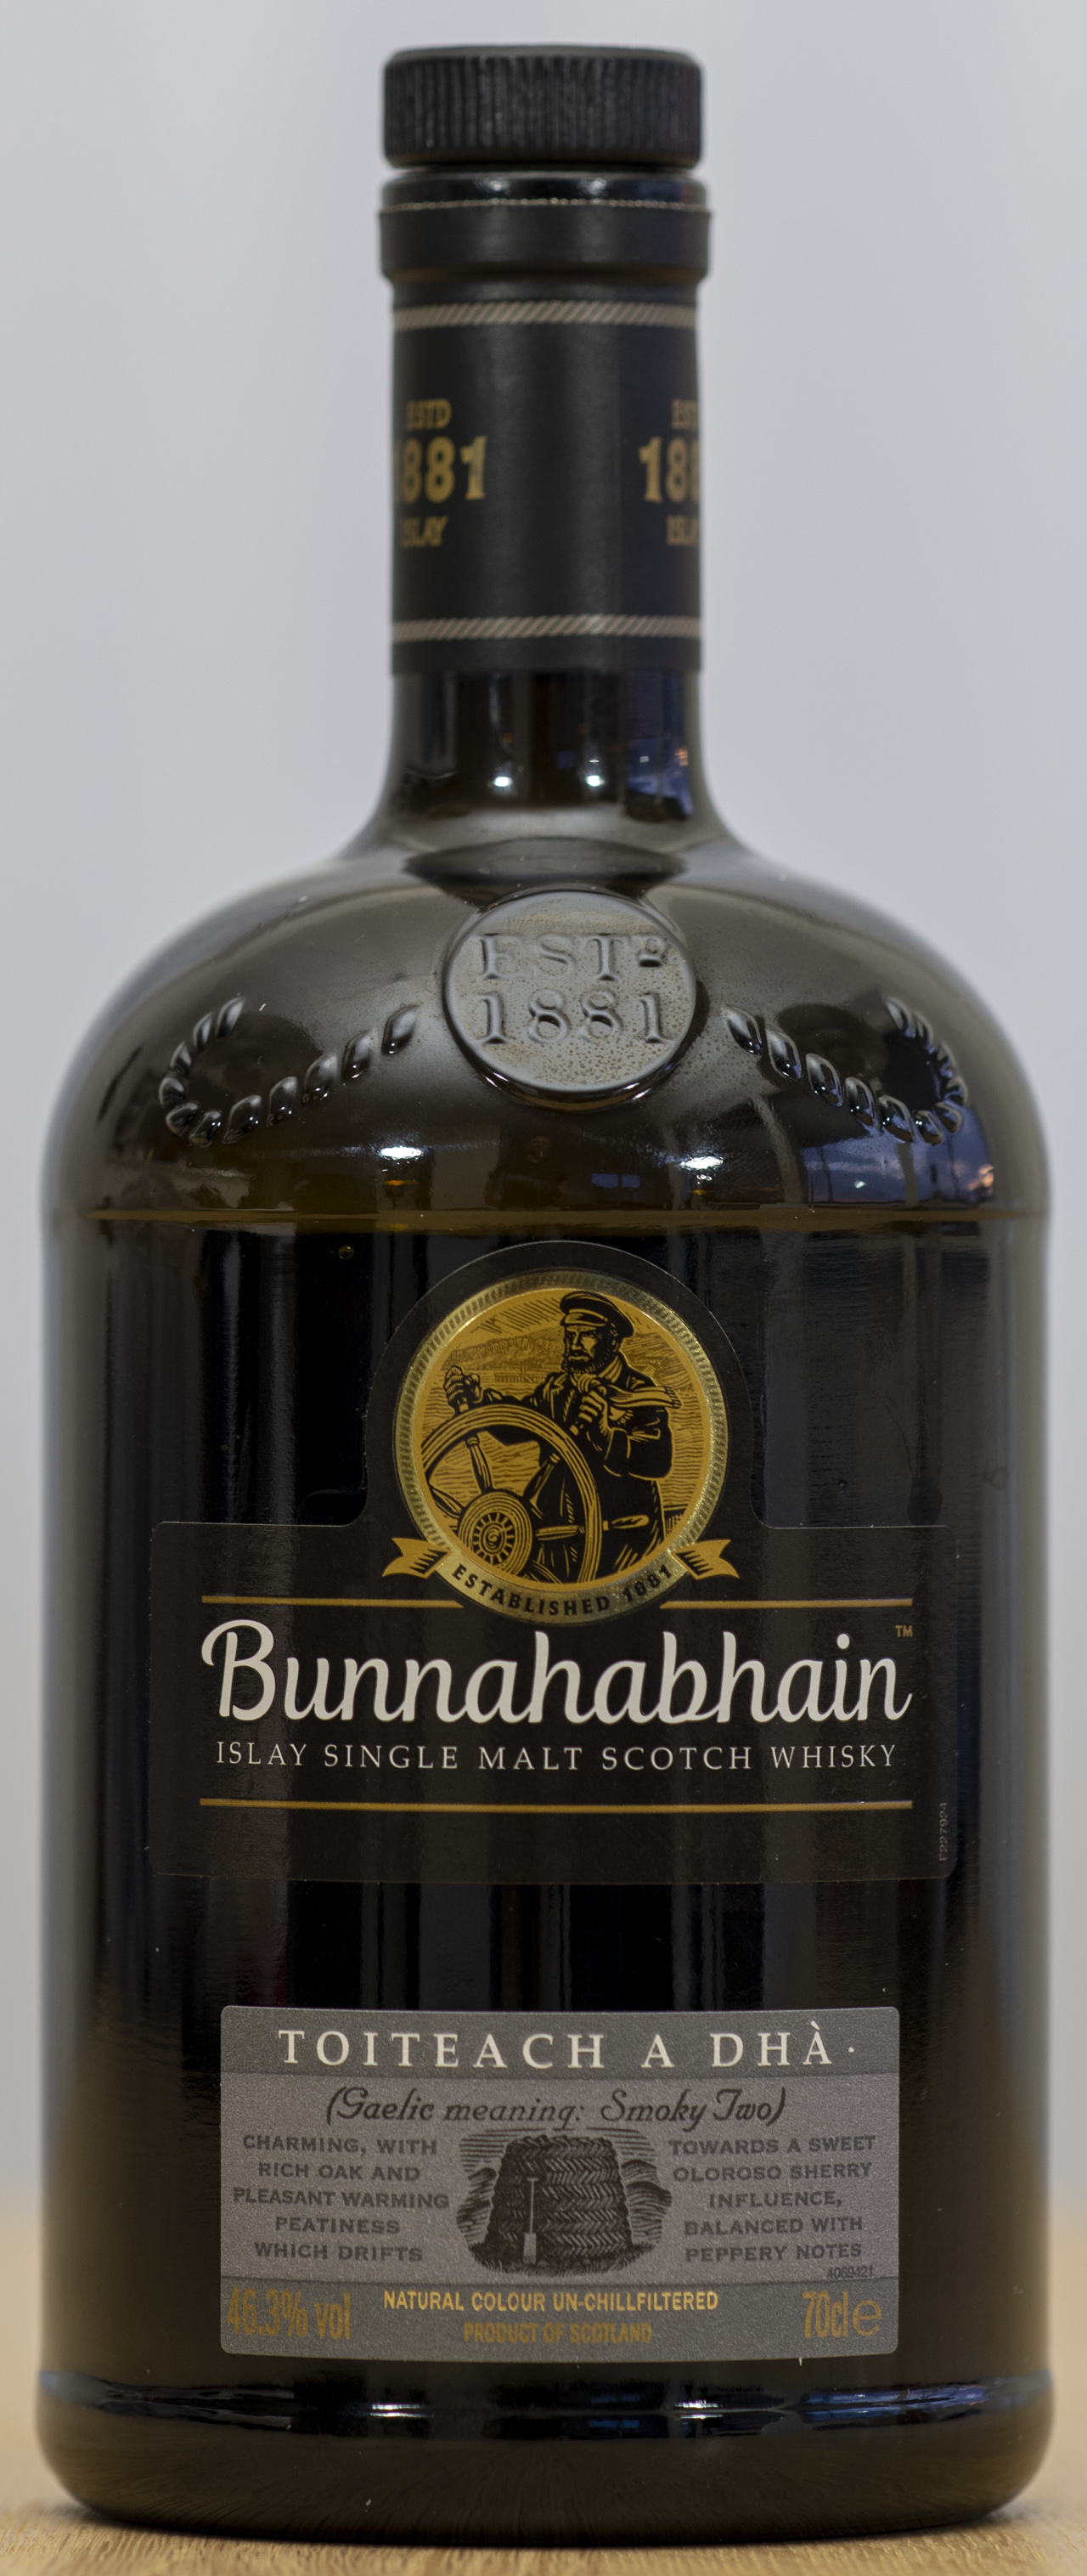 Billede: PHC_1528 - Bunnahabhain Toiteach a Dha - bottle front.jpg